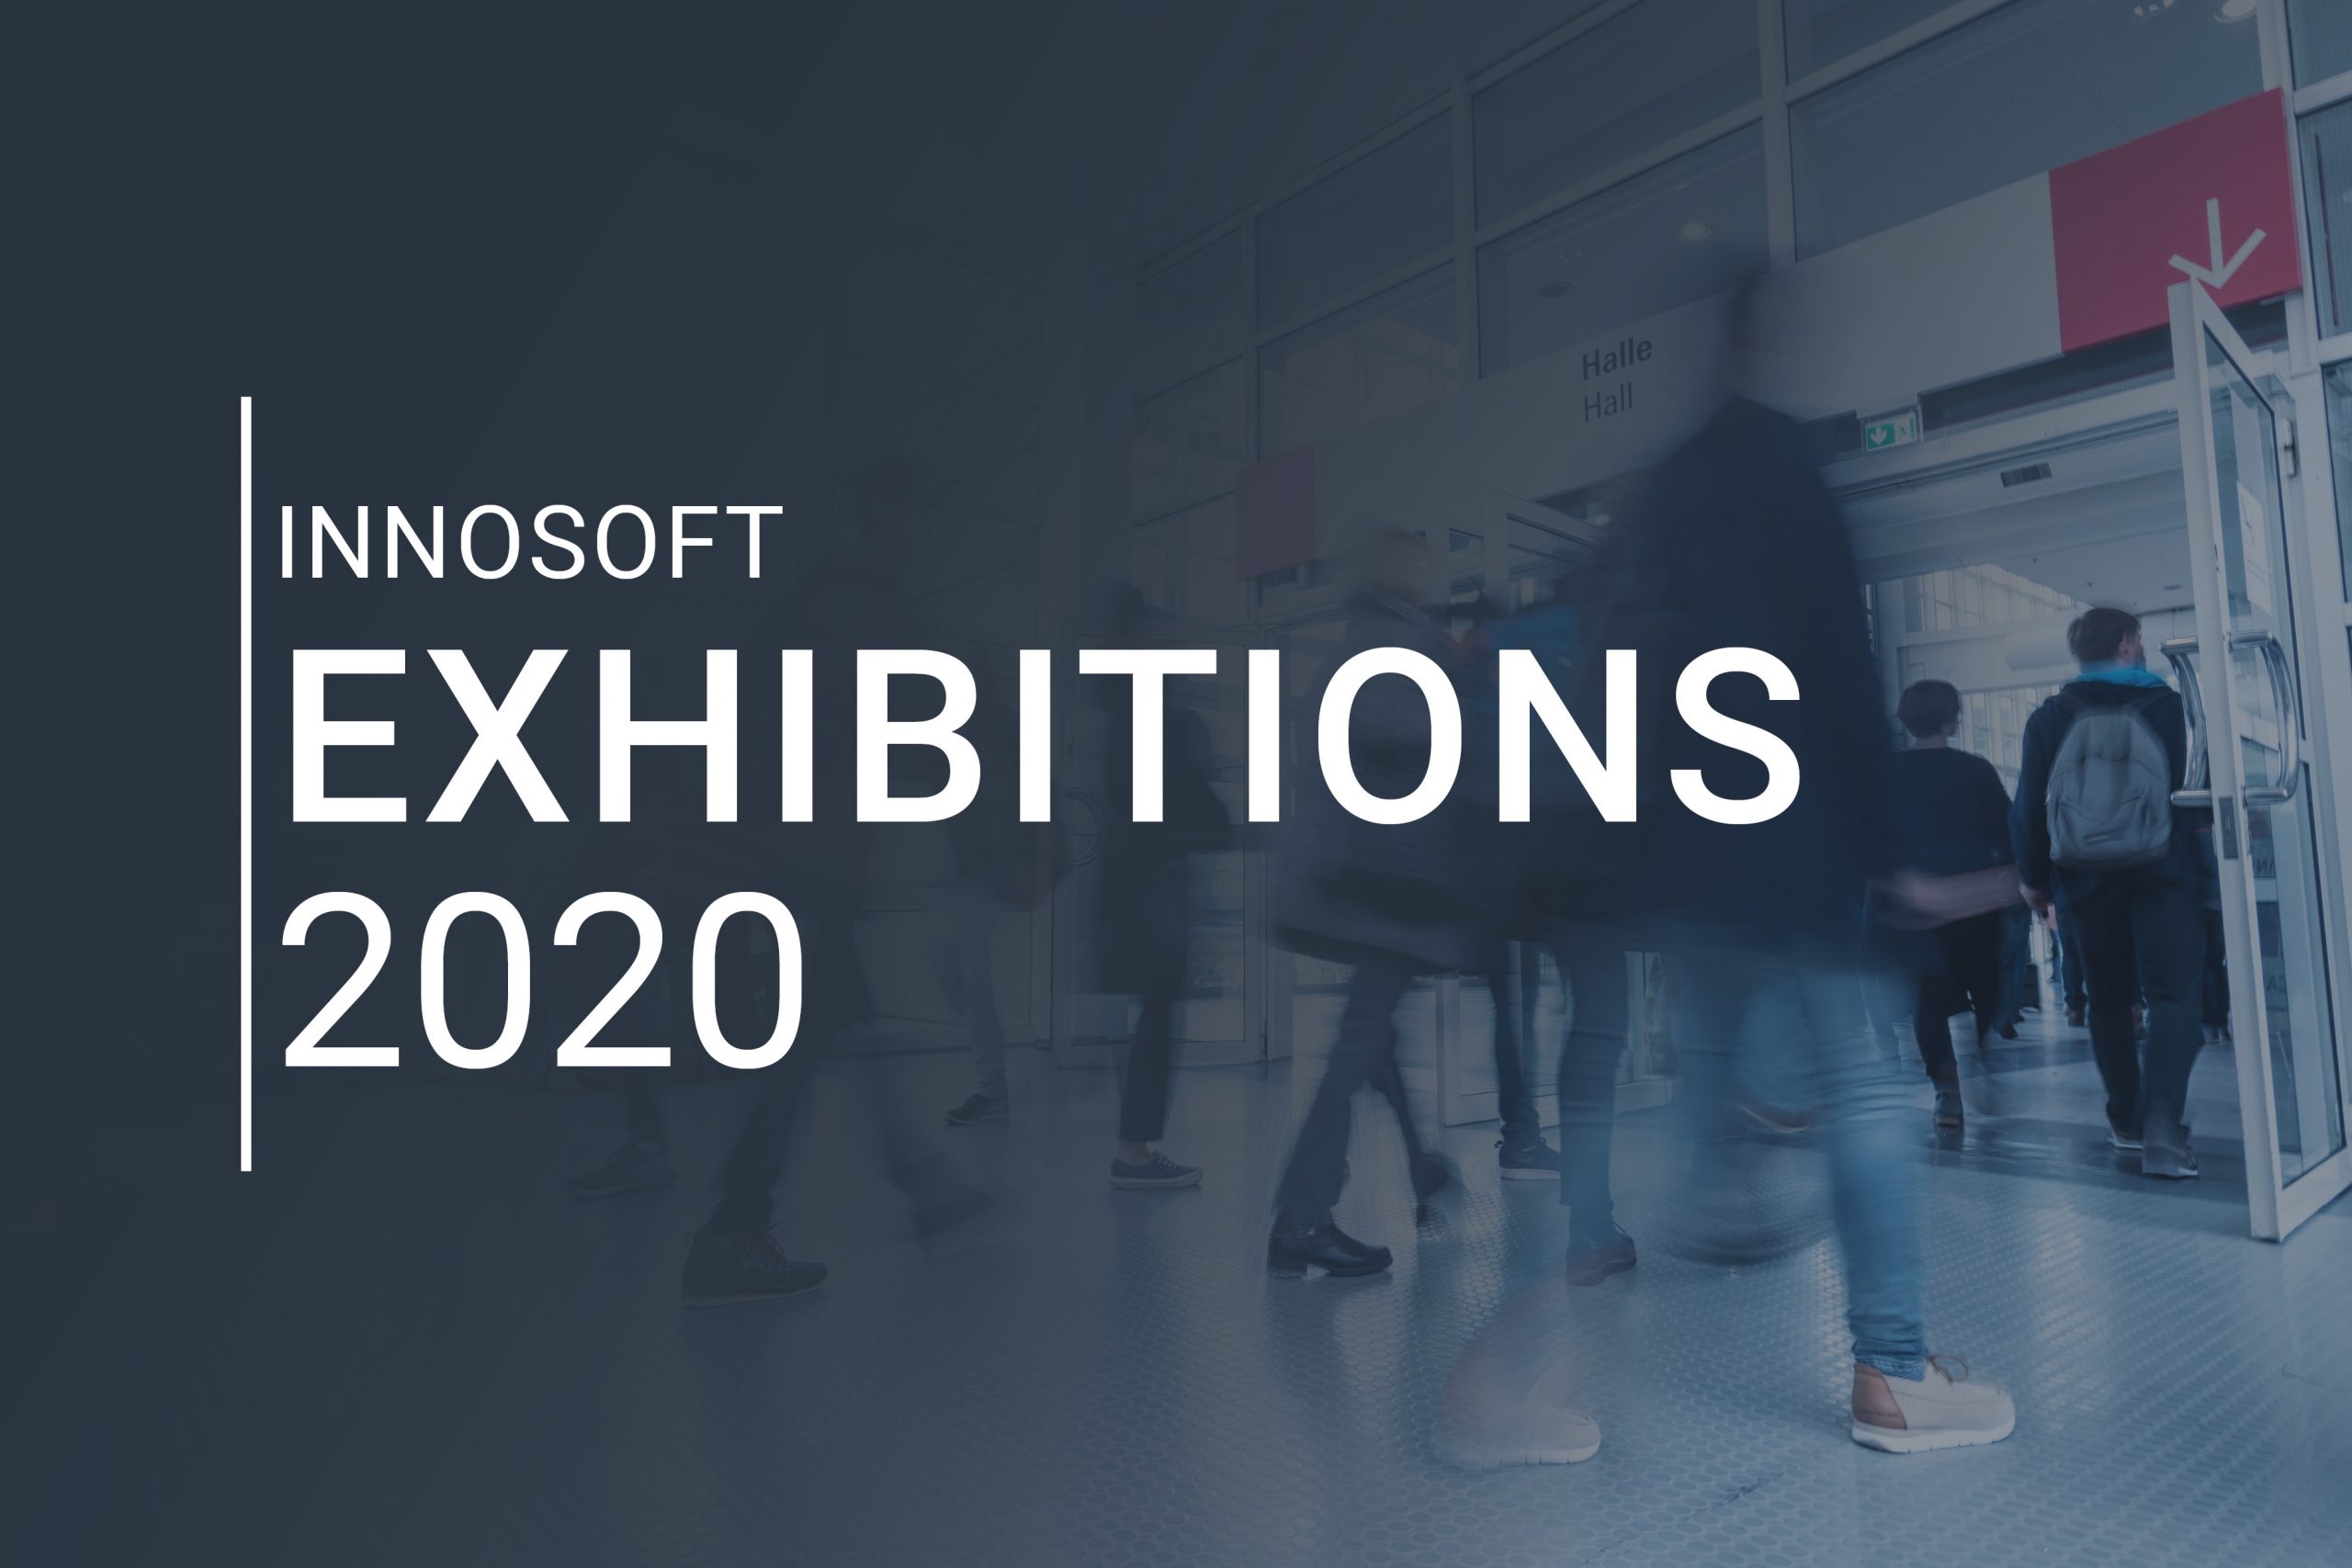 Innosoft Exhibitons 2020